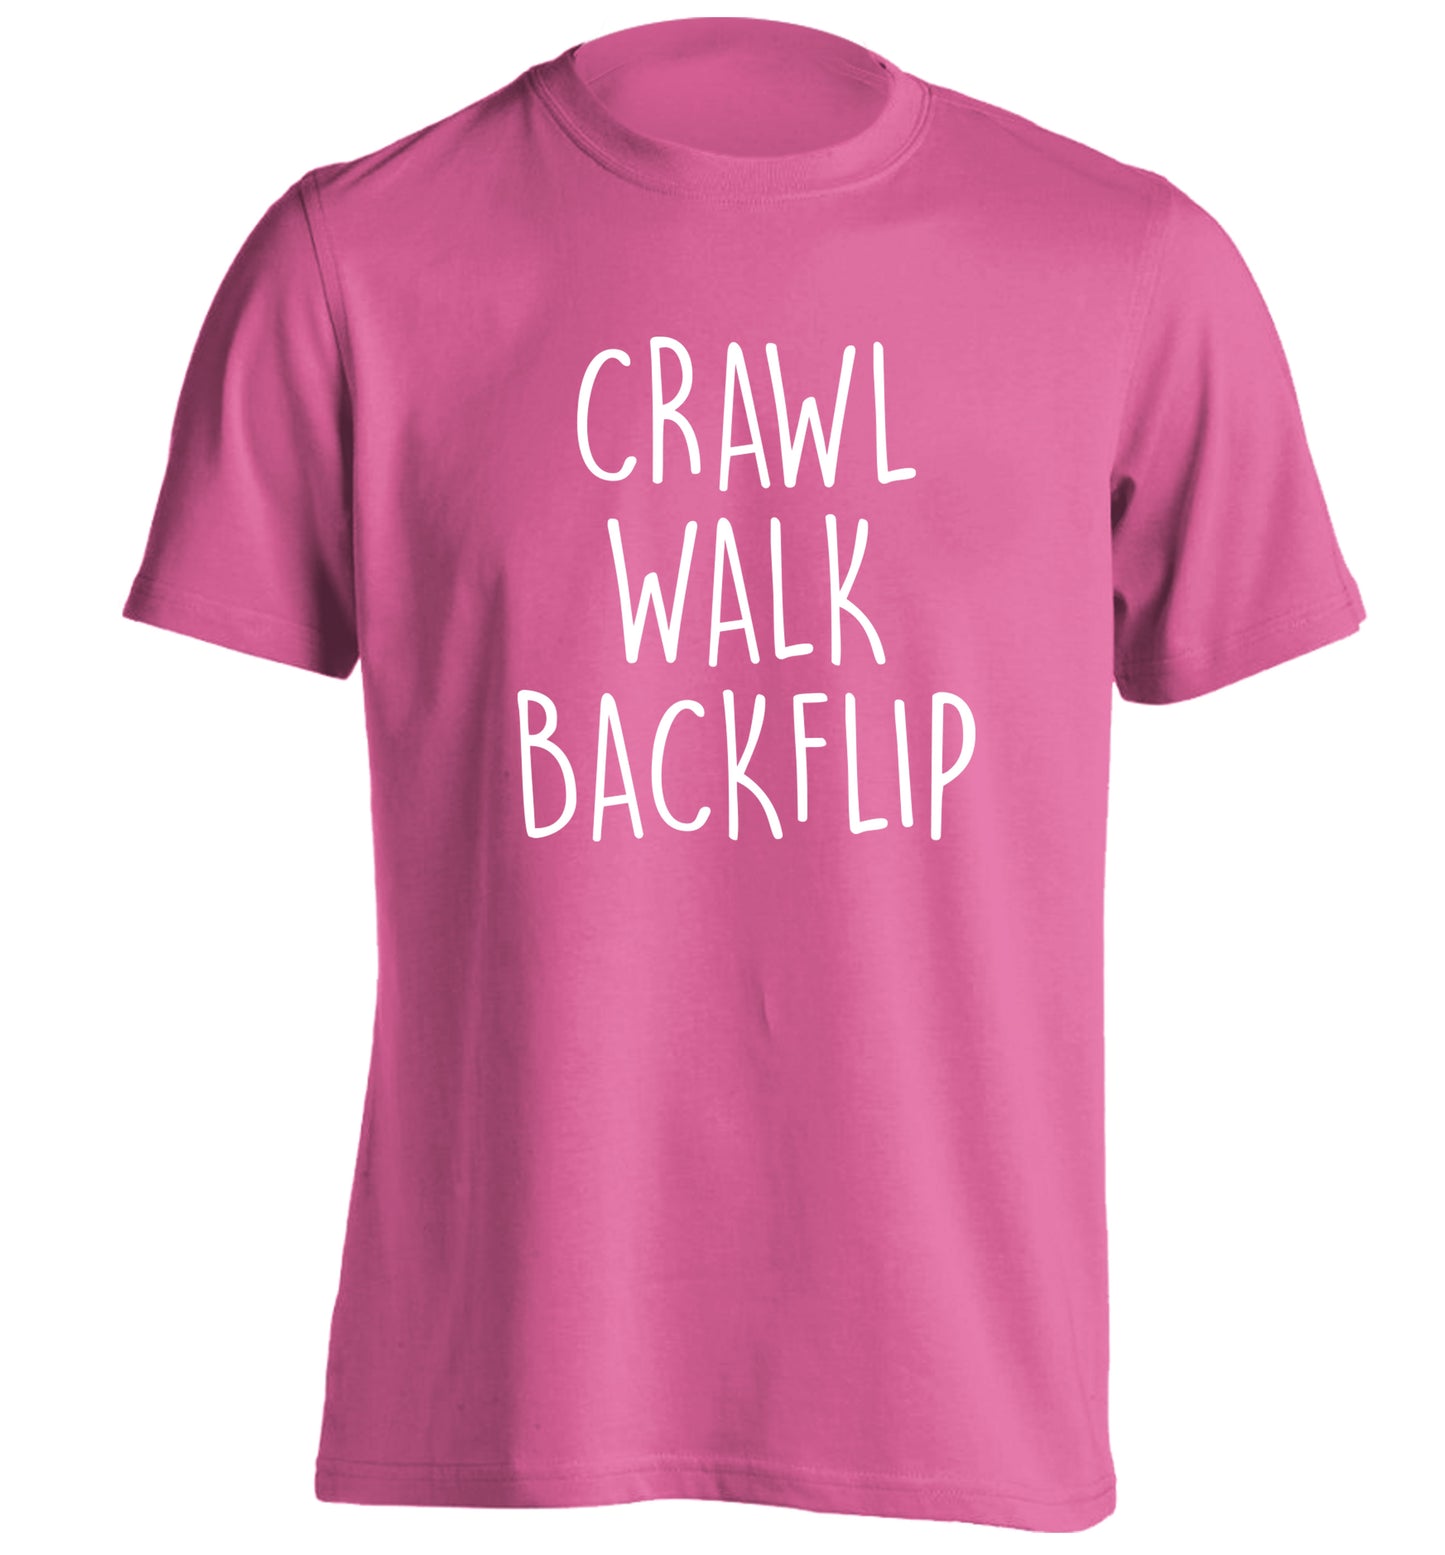 Crawl Walk Backflip adults unisex pink Tshirt 2XL